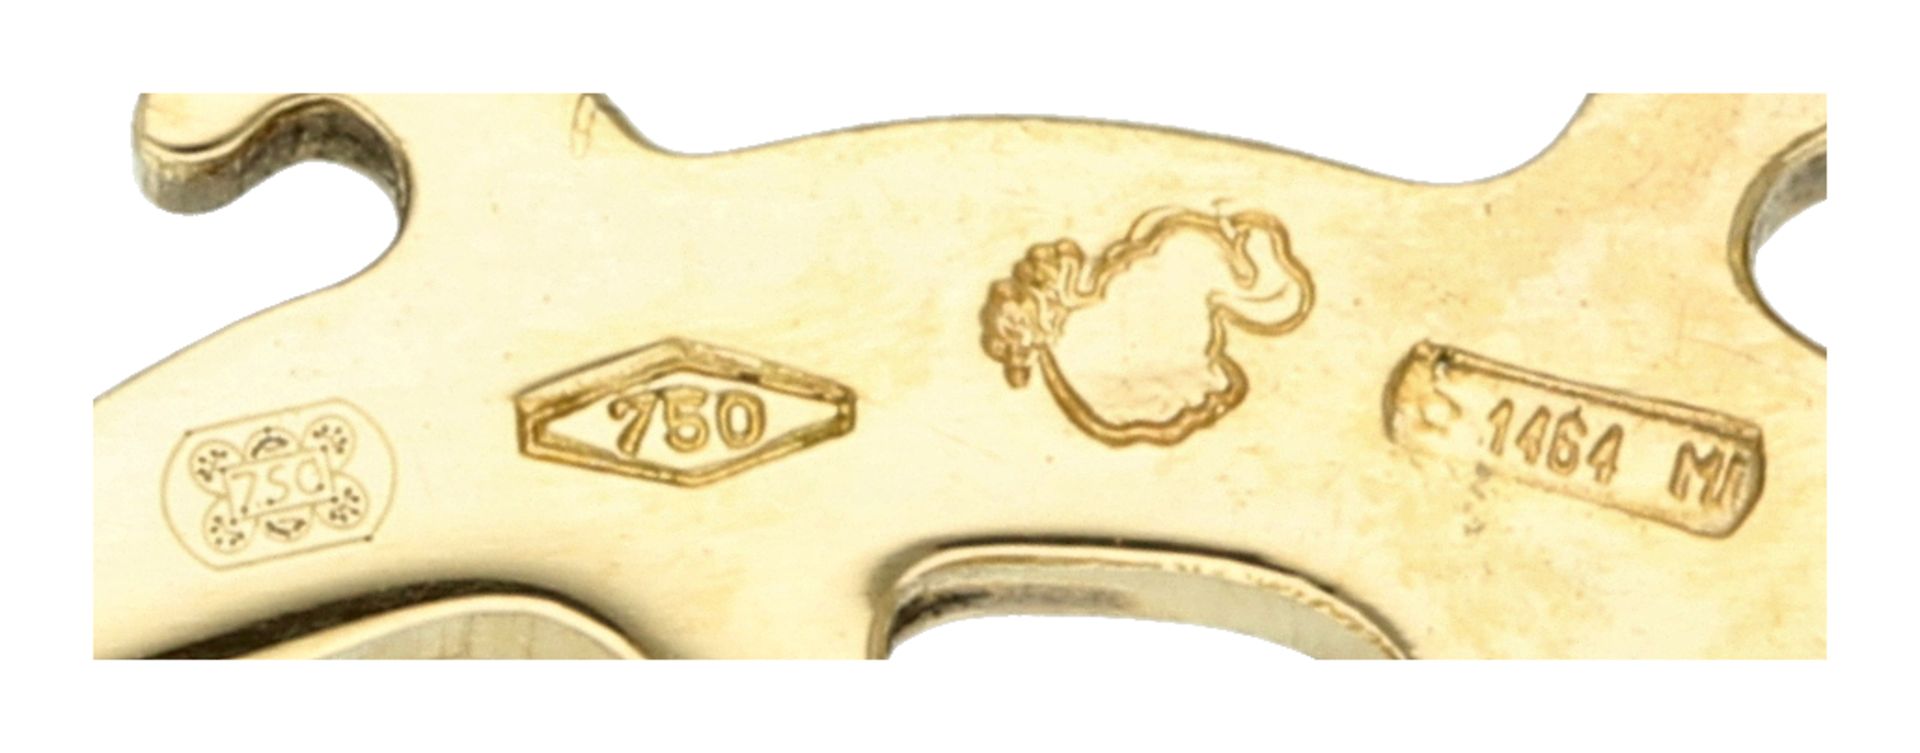 No Reserve - Pomellato 18K yellow gold DODO salamander pendant/charm - Image 3 of 3